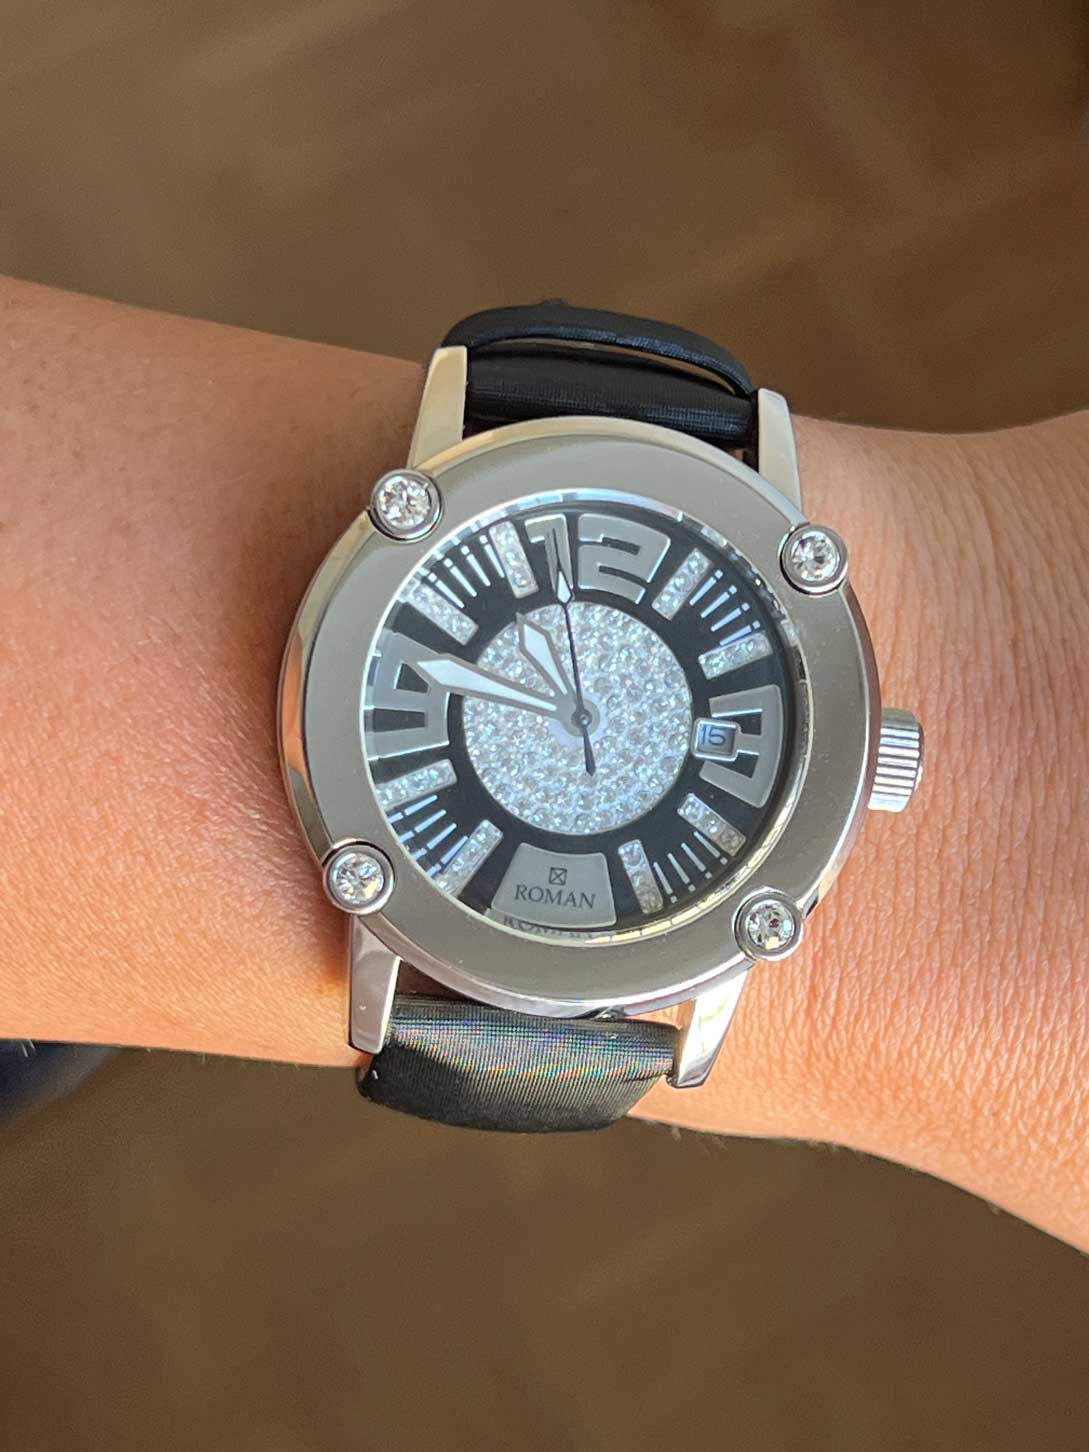 Reloj Román blanco y negro con correa de seda negra.